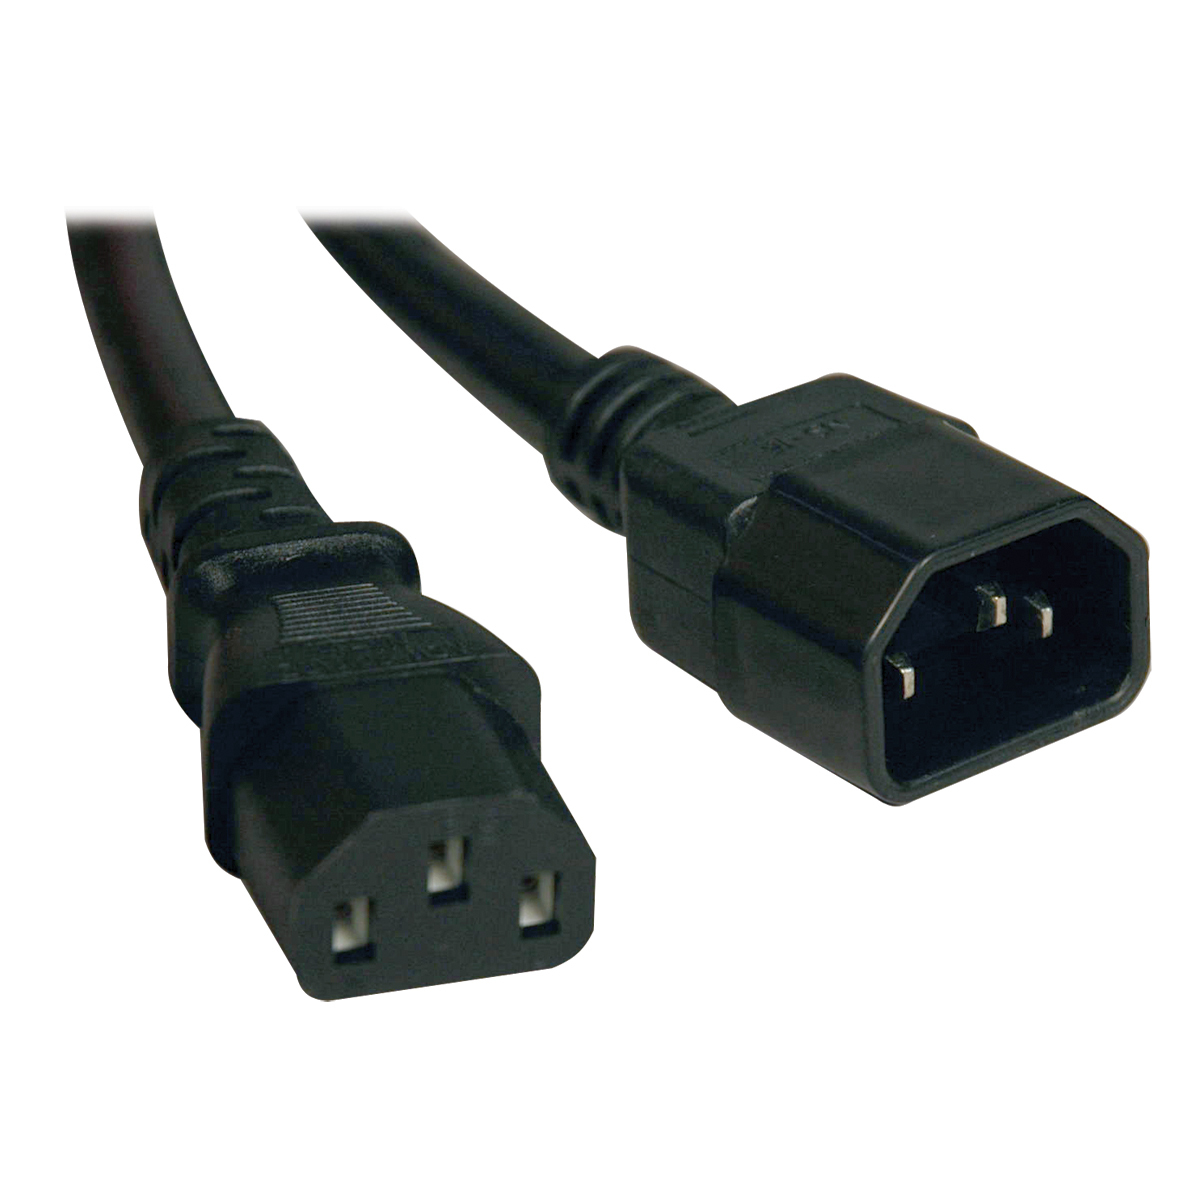 Cable De Poder Tripp Lite C14 Coupler Macho - C13 Coupler Hembra 61Cm